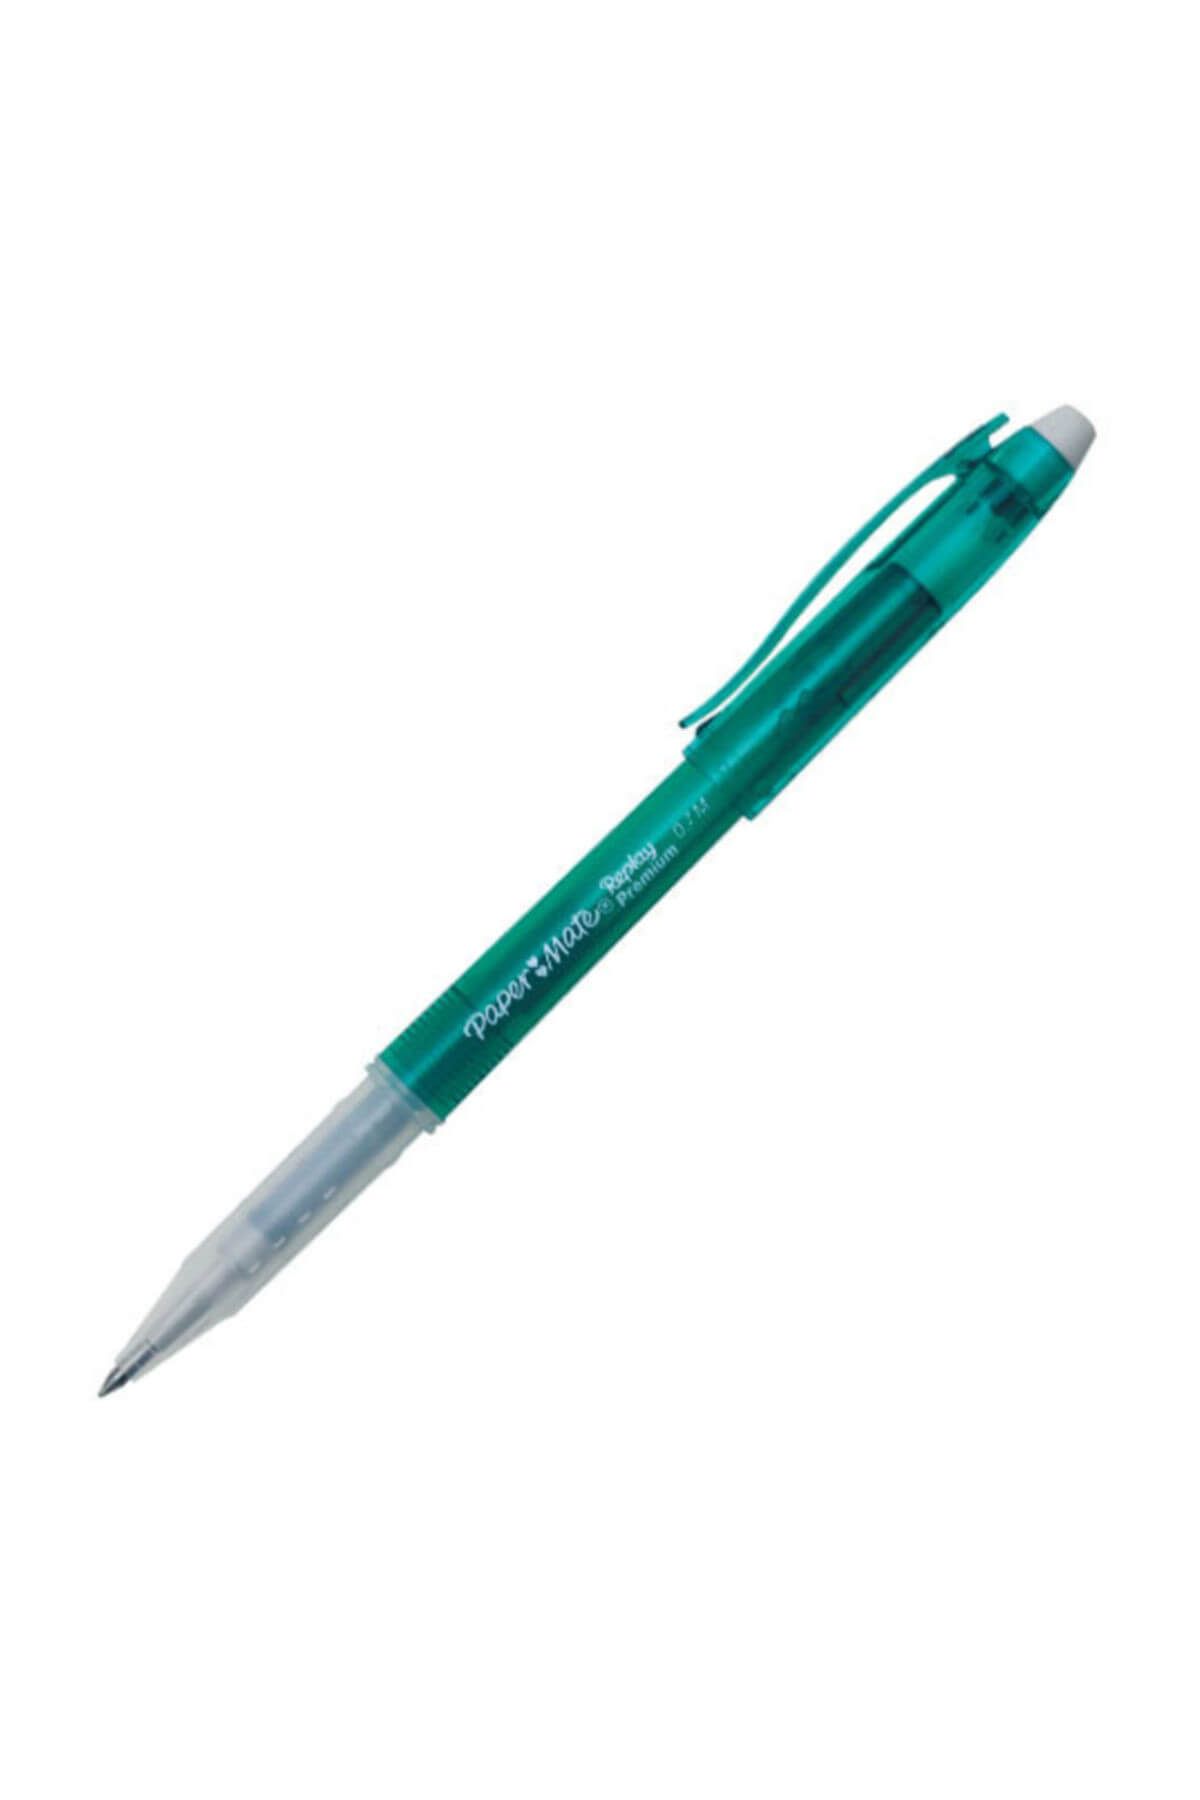 Paper Mate Replay Premium Silinebilir Jel Kalem Yeşil 1901325  /